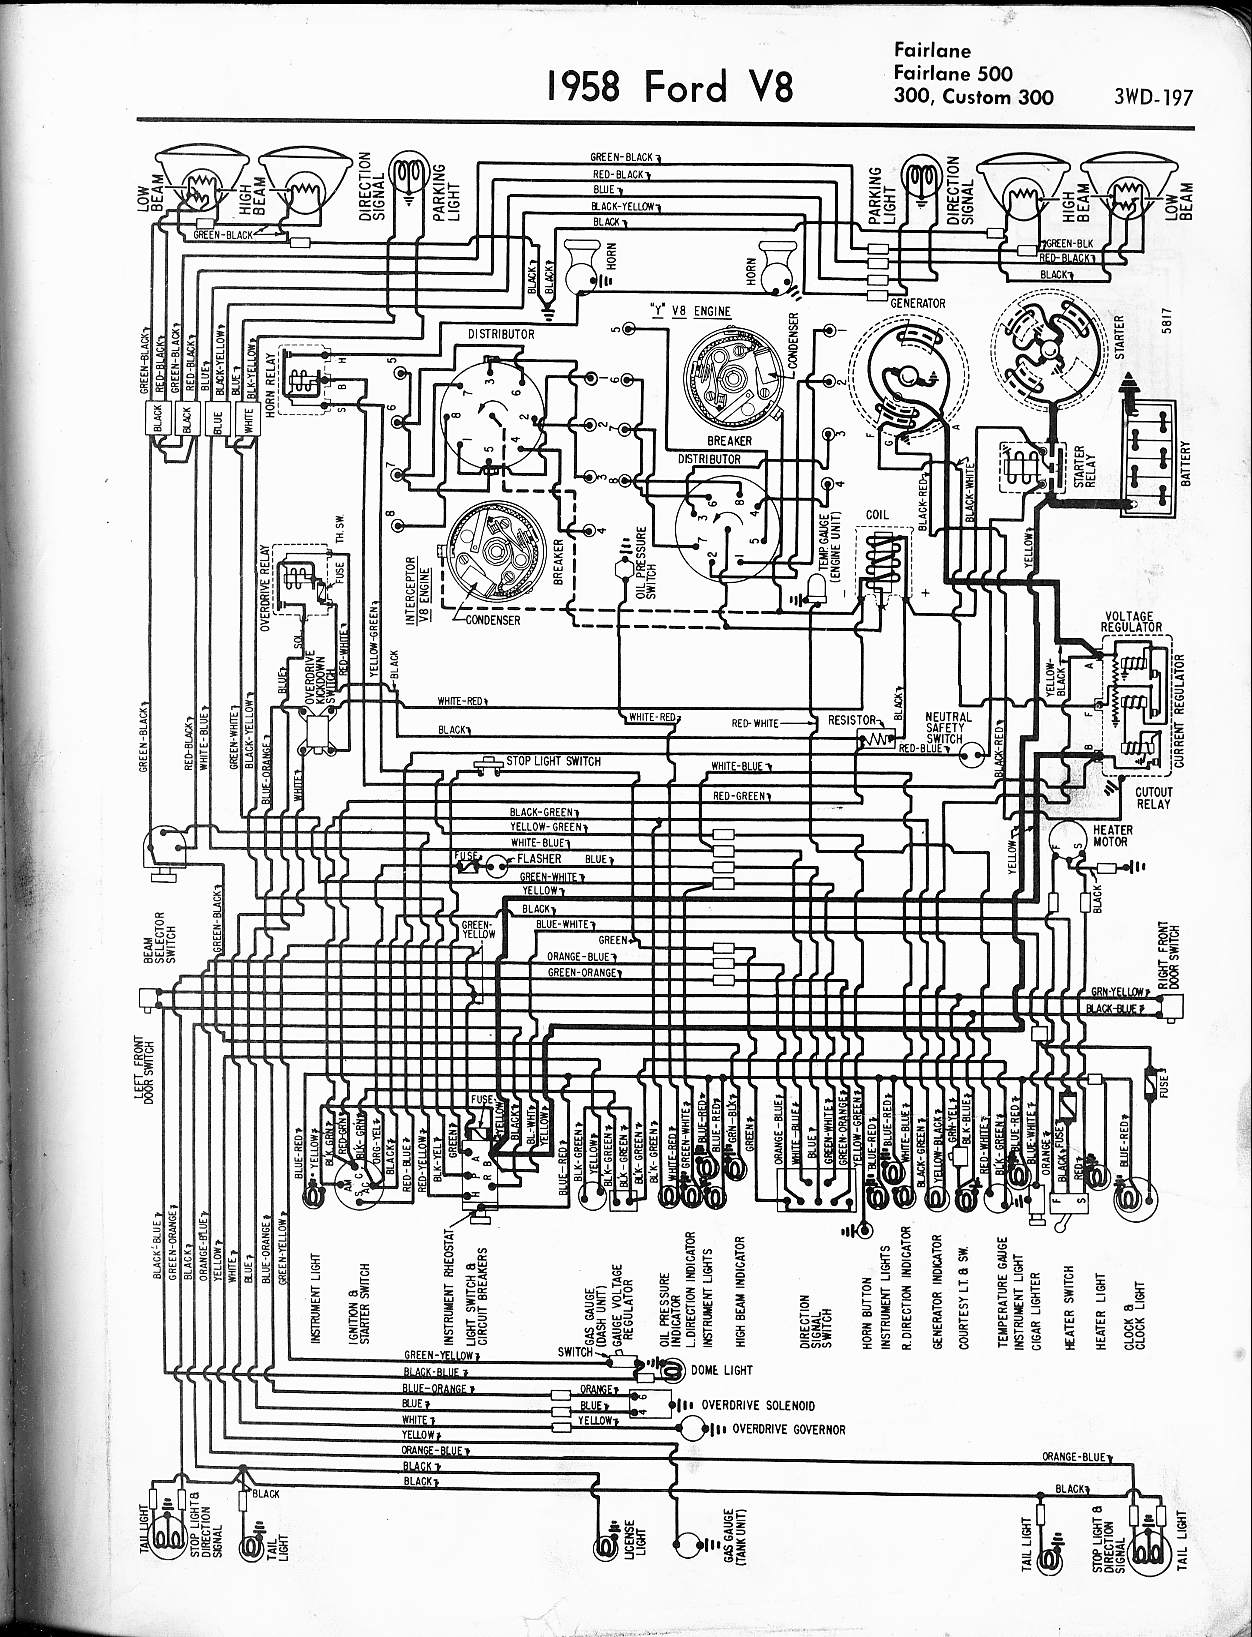 1962 Ford fairlane wiring diagram #2